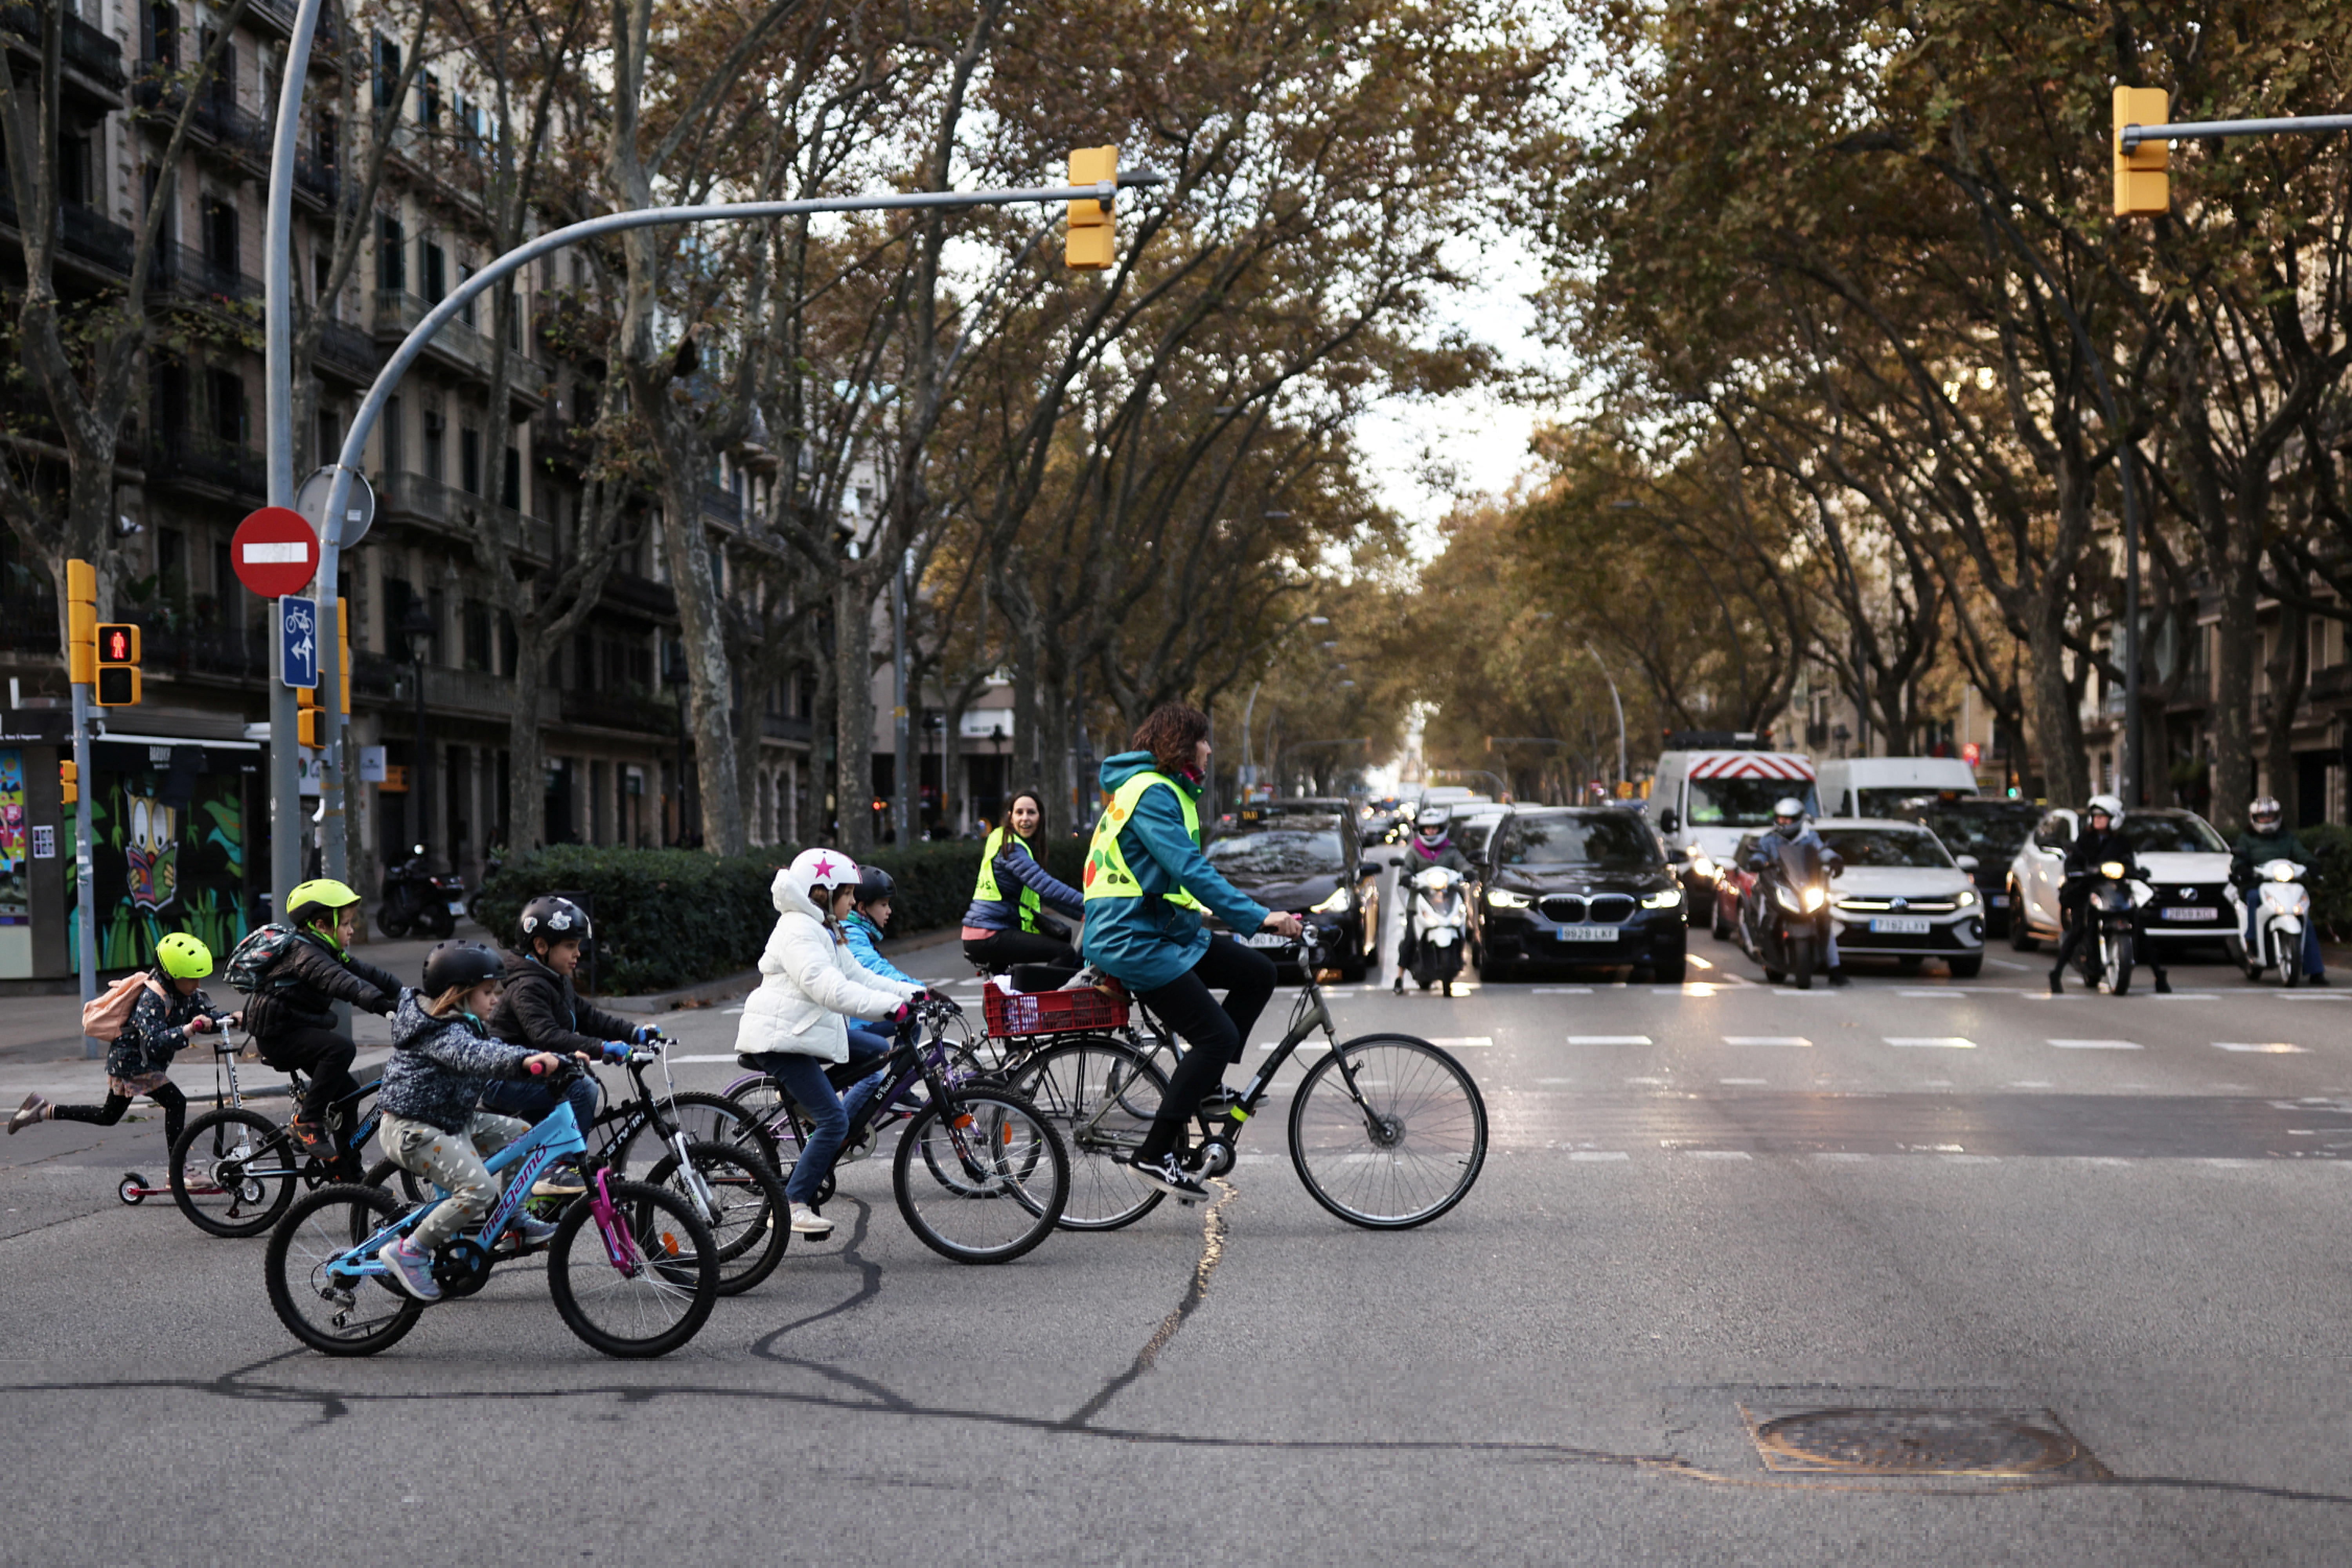 Barcelona’s bike bus scheme for kids encourages green transport habits